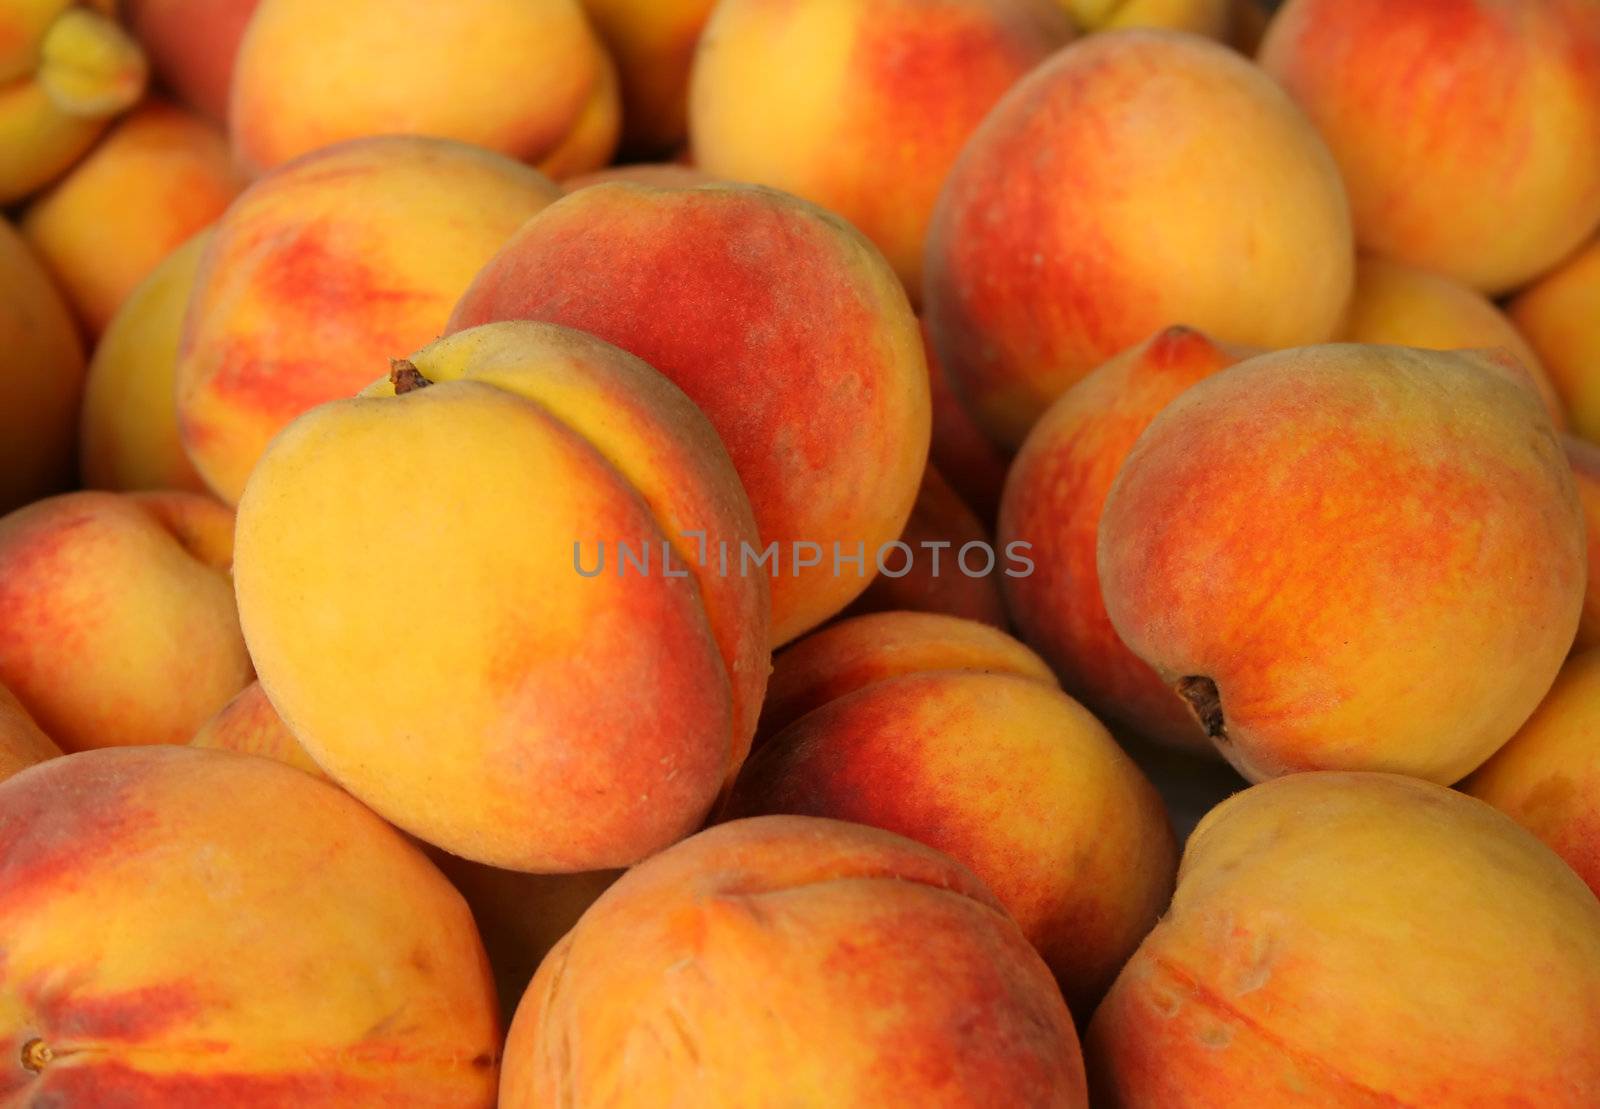 Peaches by thephotoguy